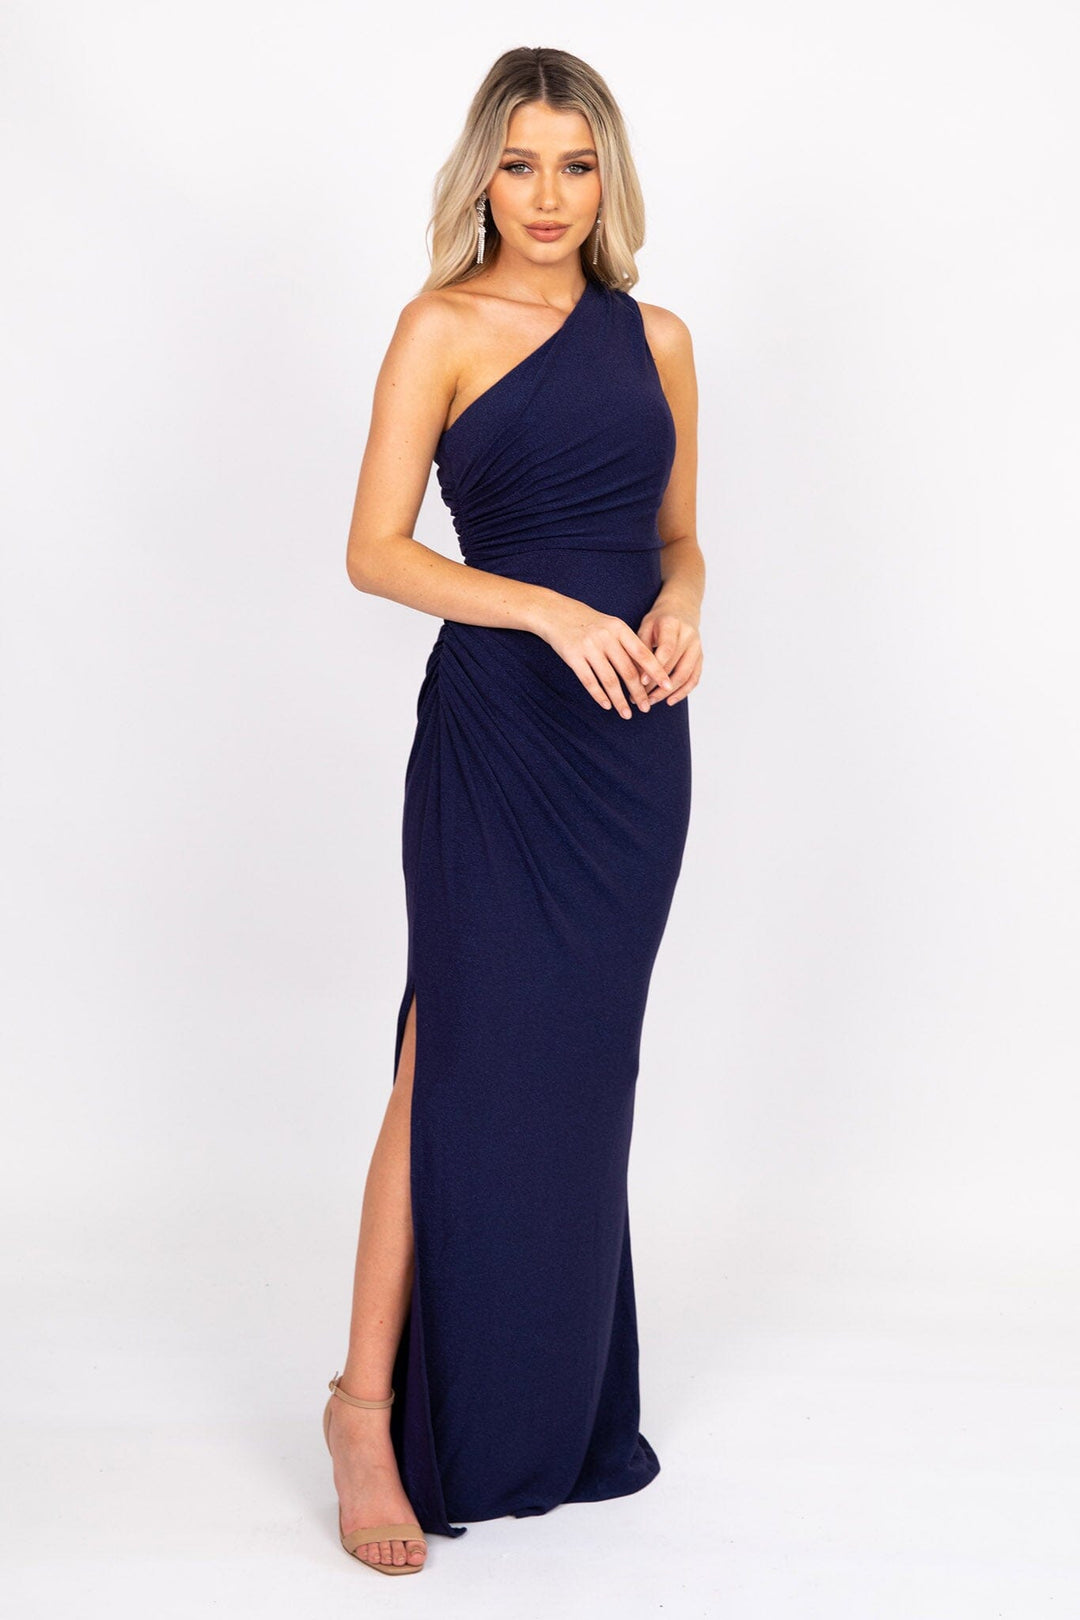 Formal Dresses Australia | Sparkly Formal Dresses | Noodz Boutique